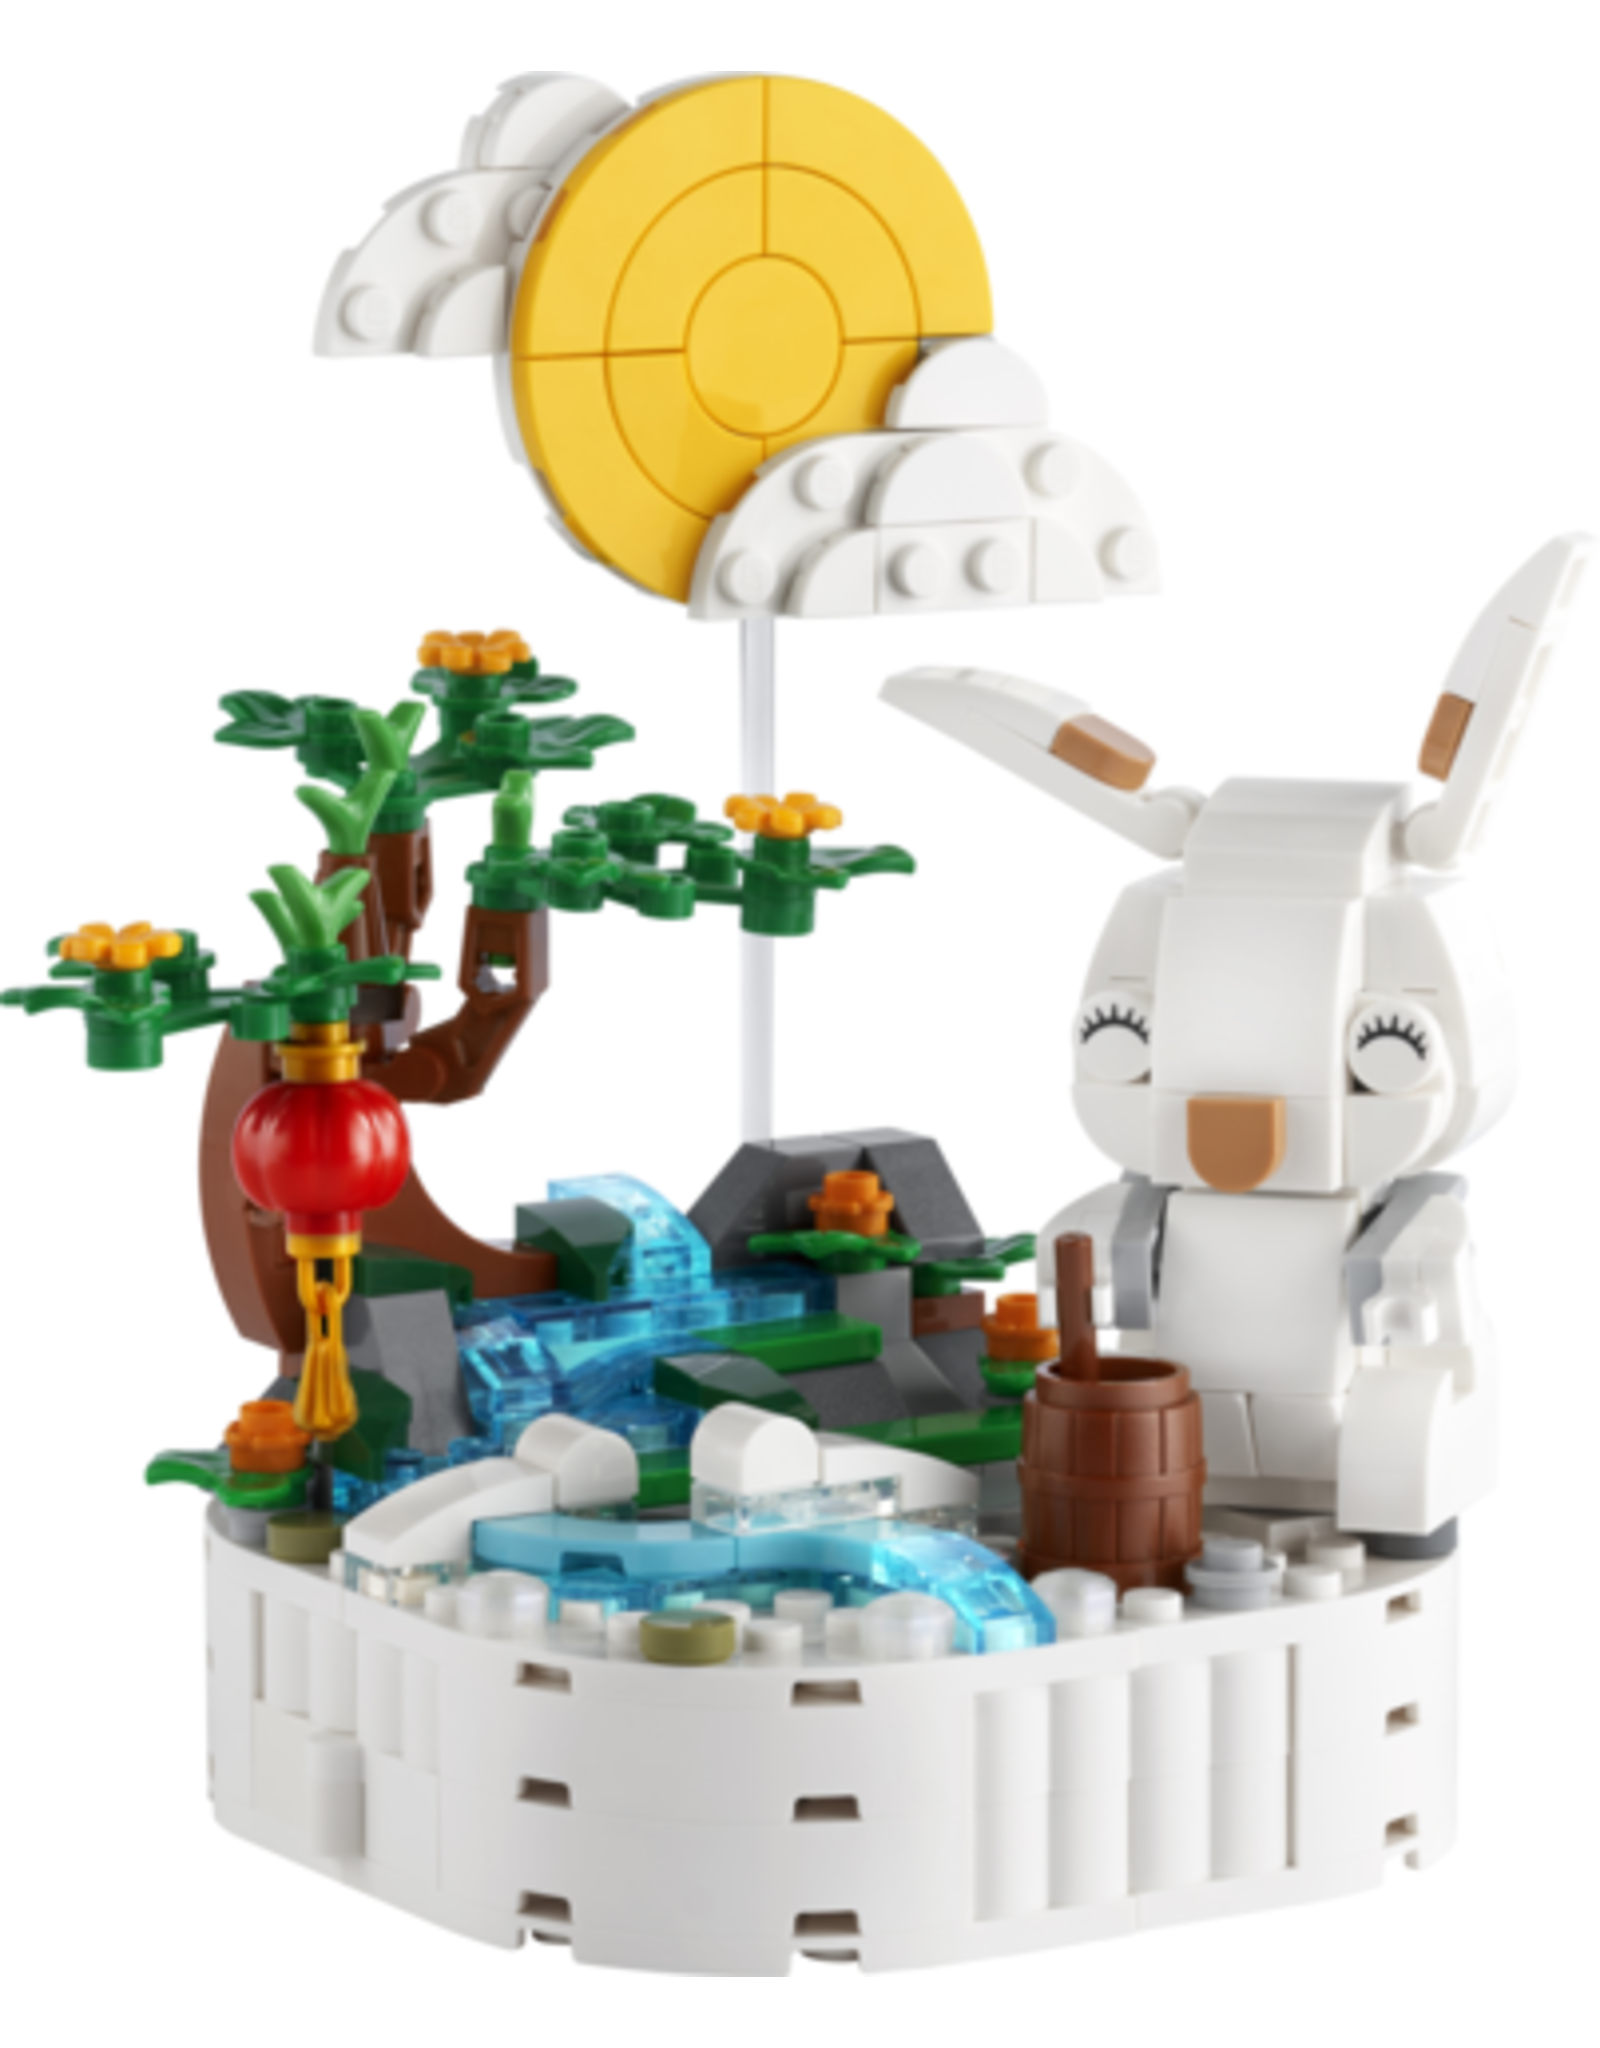 LEGO Jade Rabbit 40643